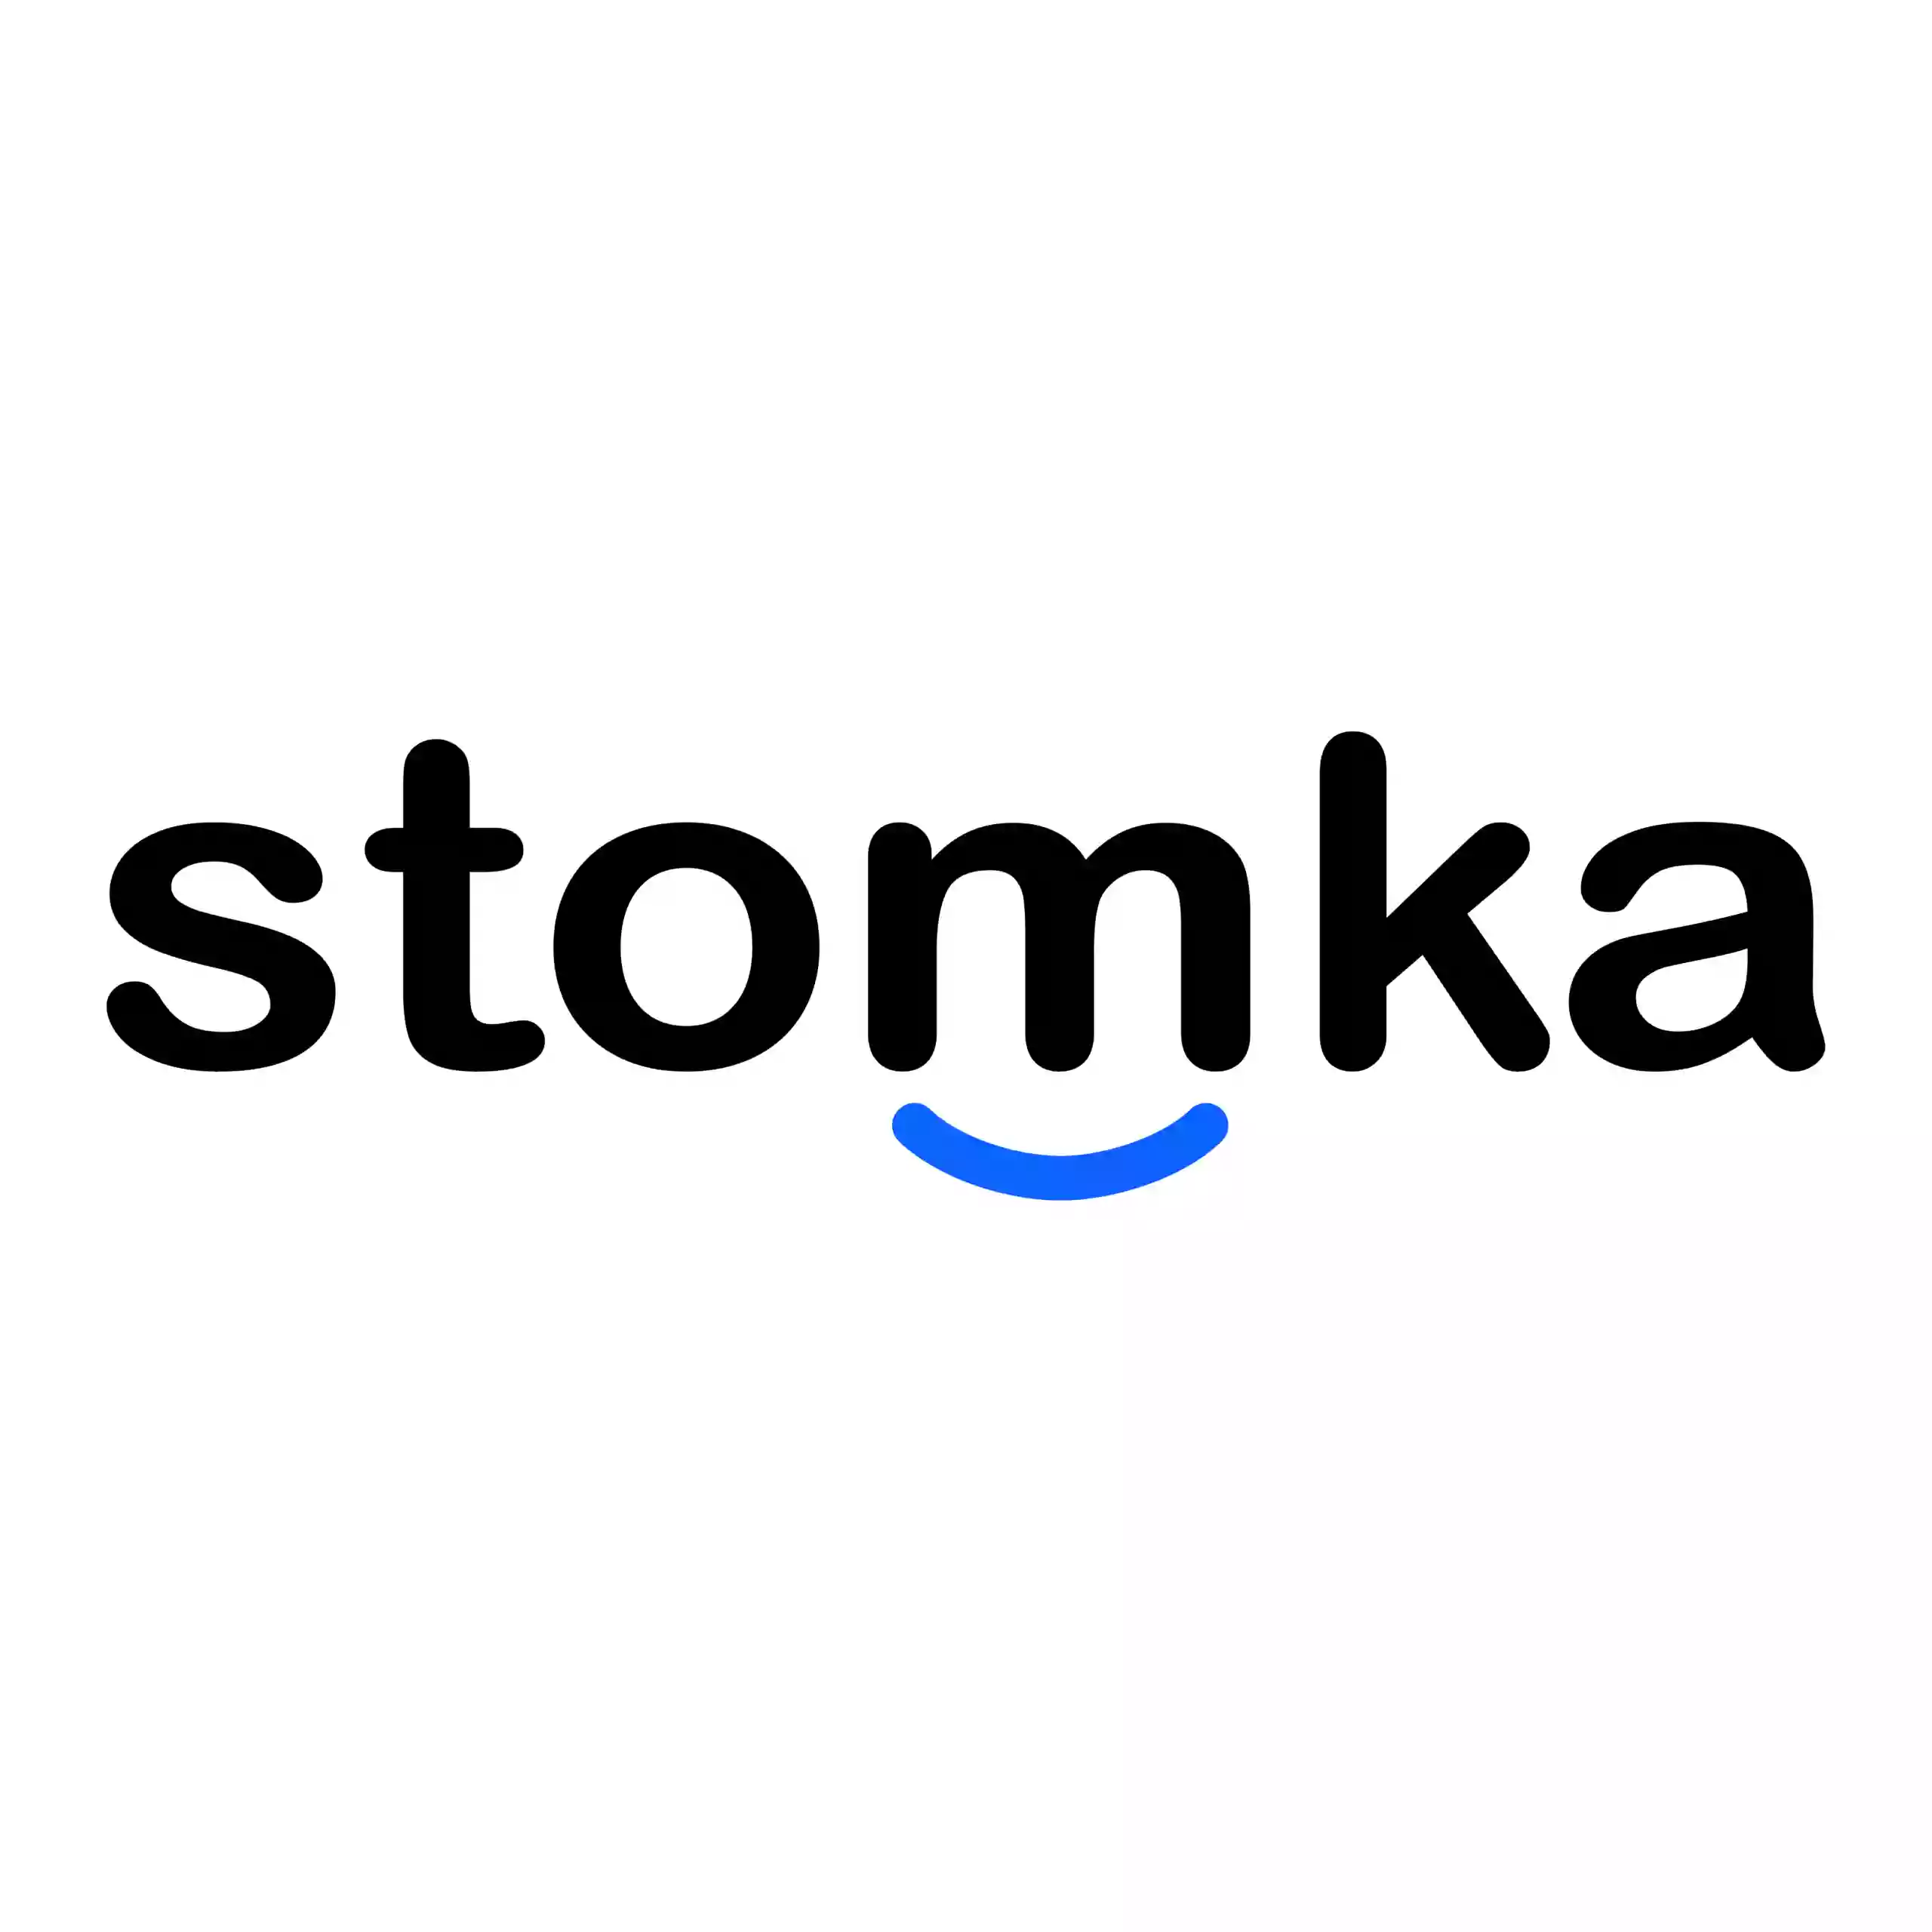 Stomka - Centrum Nowoczesnej Stomatologii